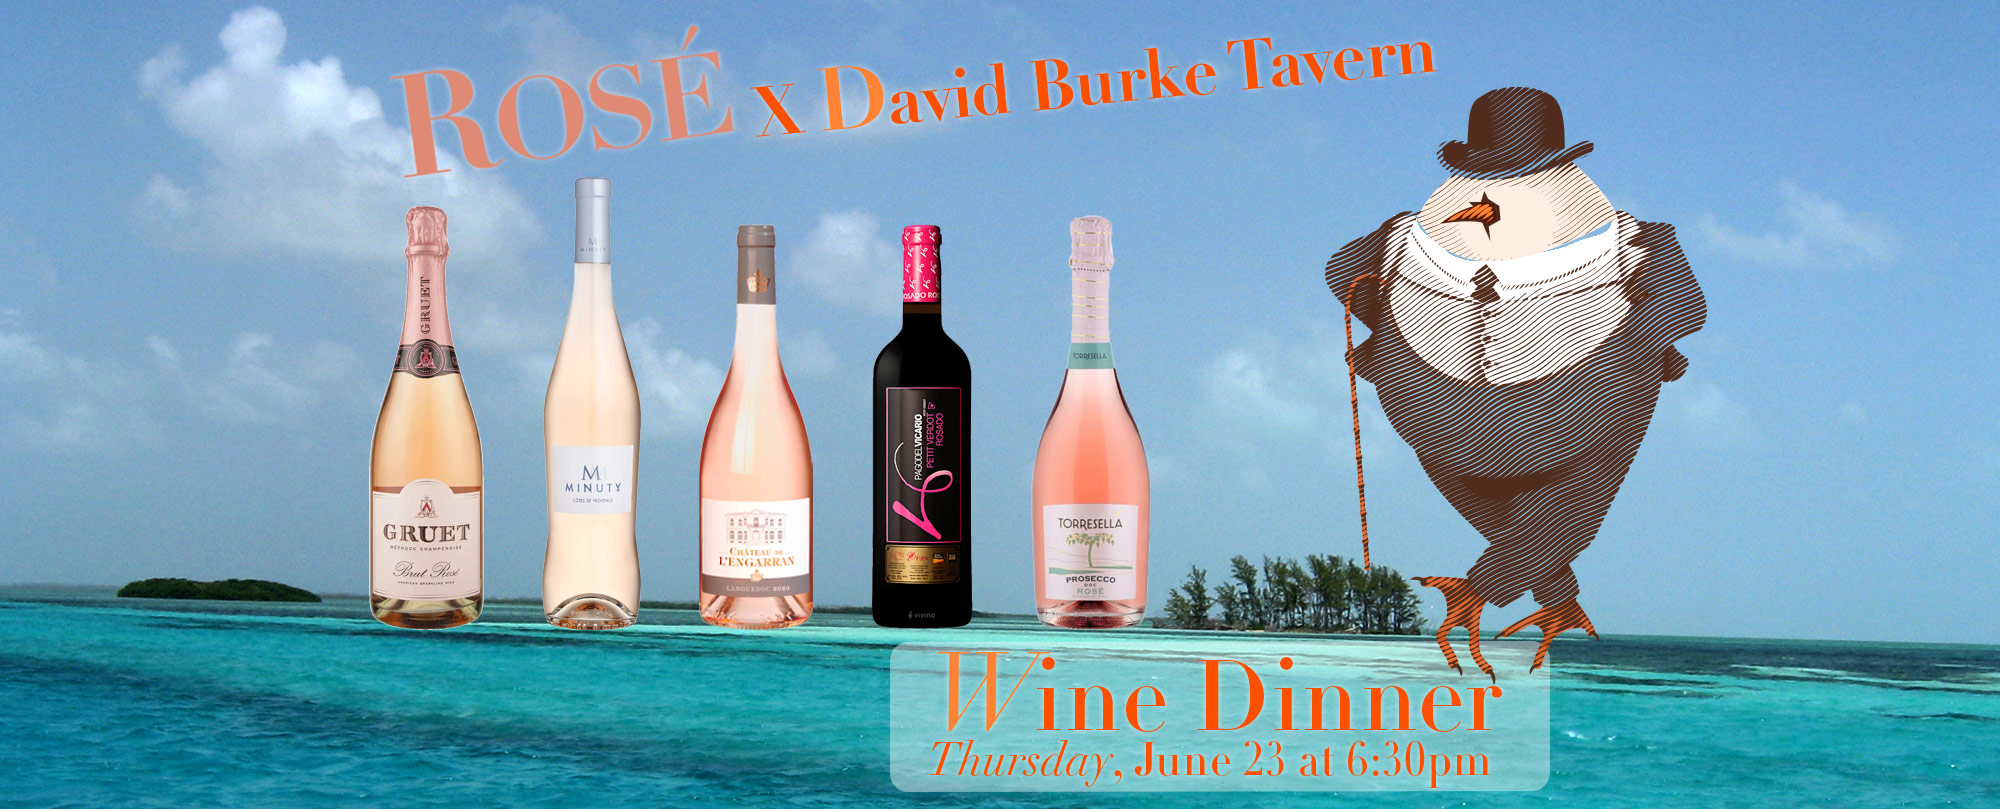 ROSE X David Burke Tavern Wine Dinner